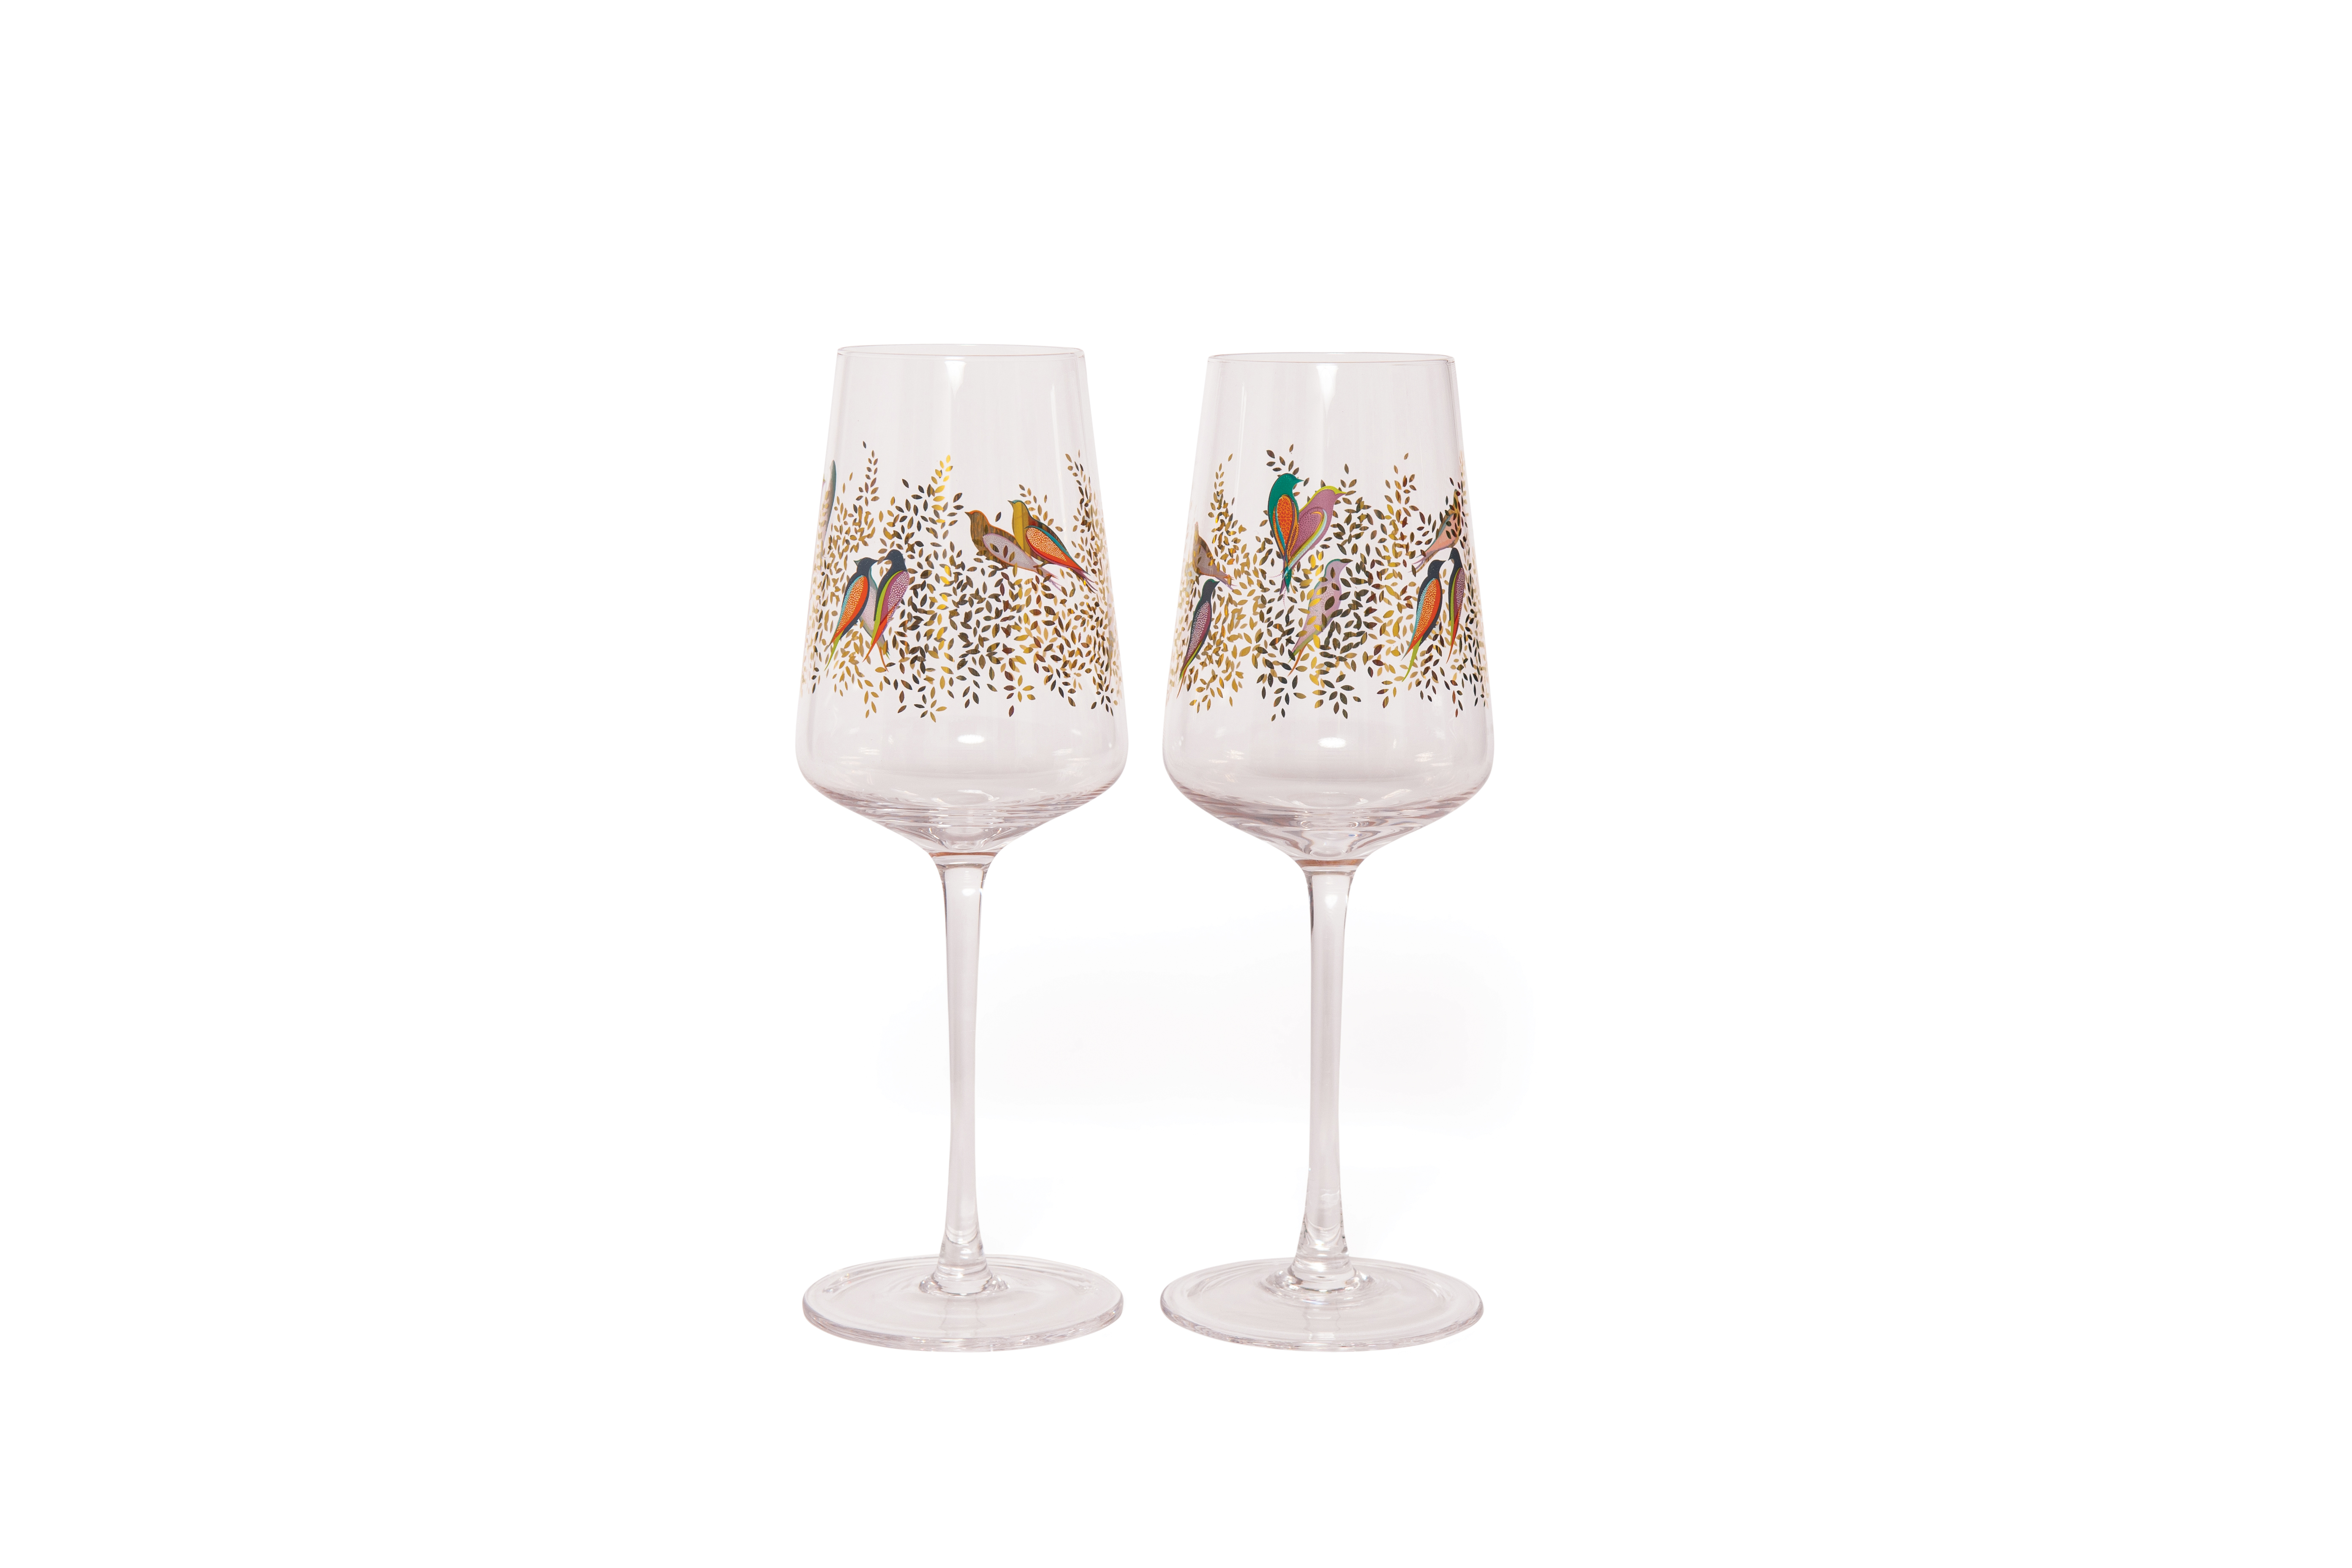 Sara Miller London Chelsea Wine Glasses Set of 2